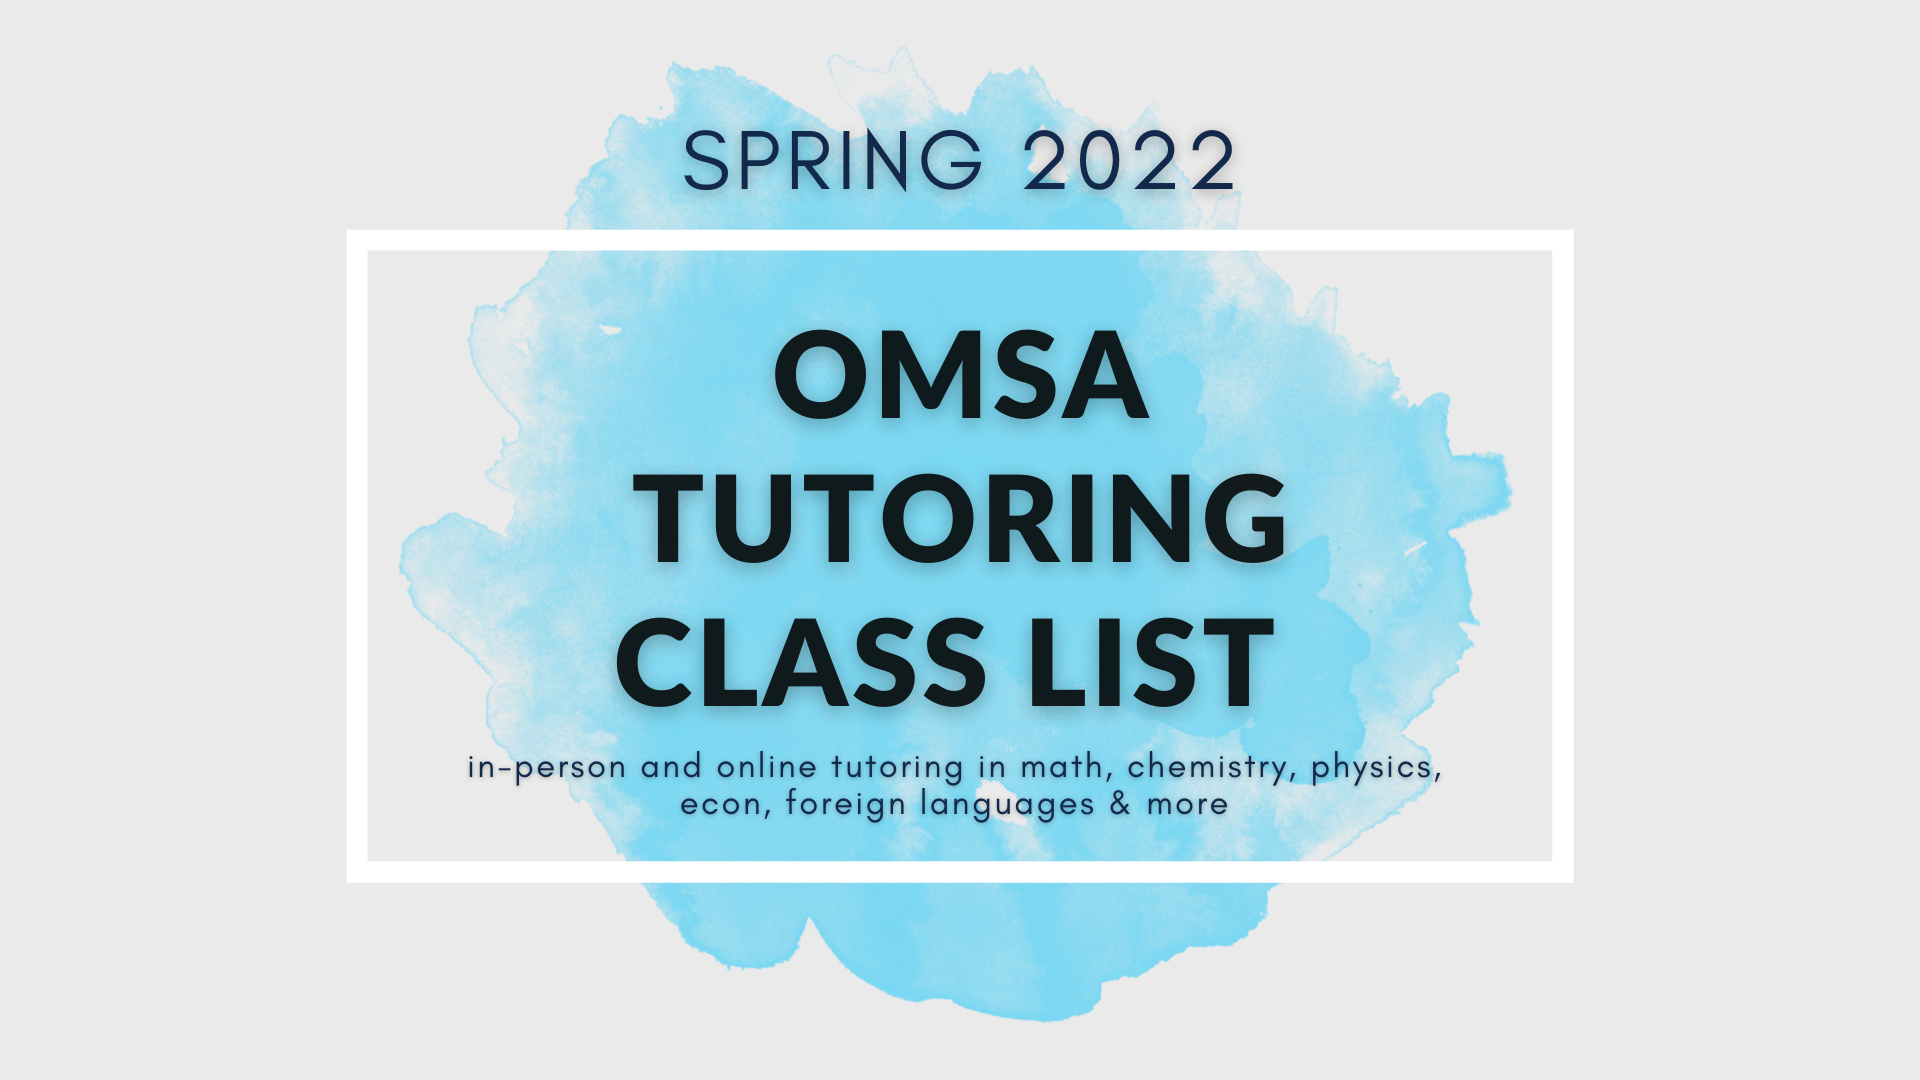 Spring 2022 Tutoring Class List graphic